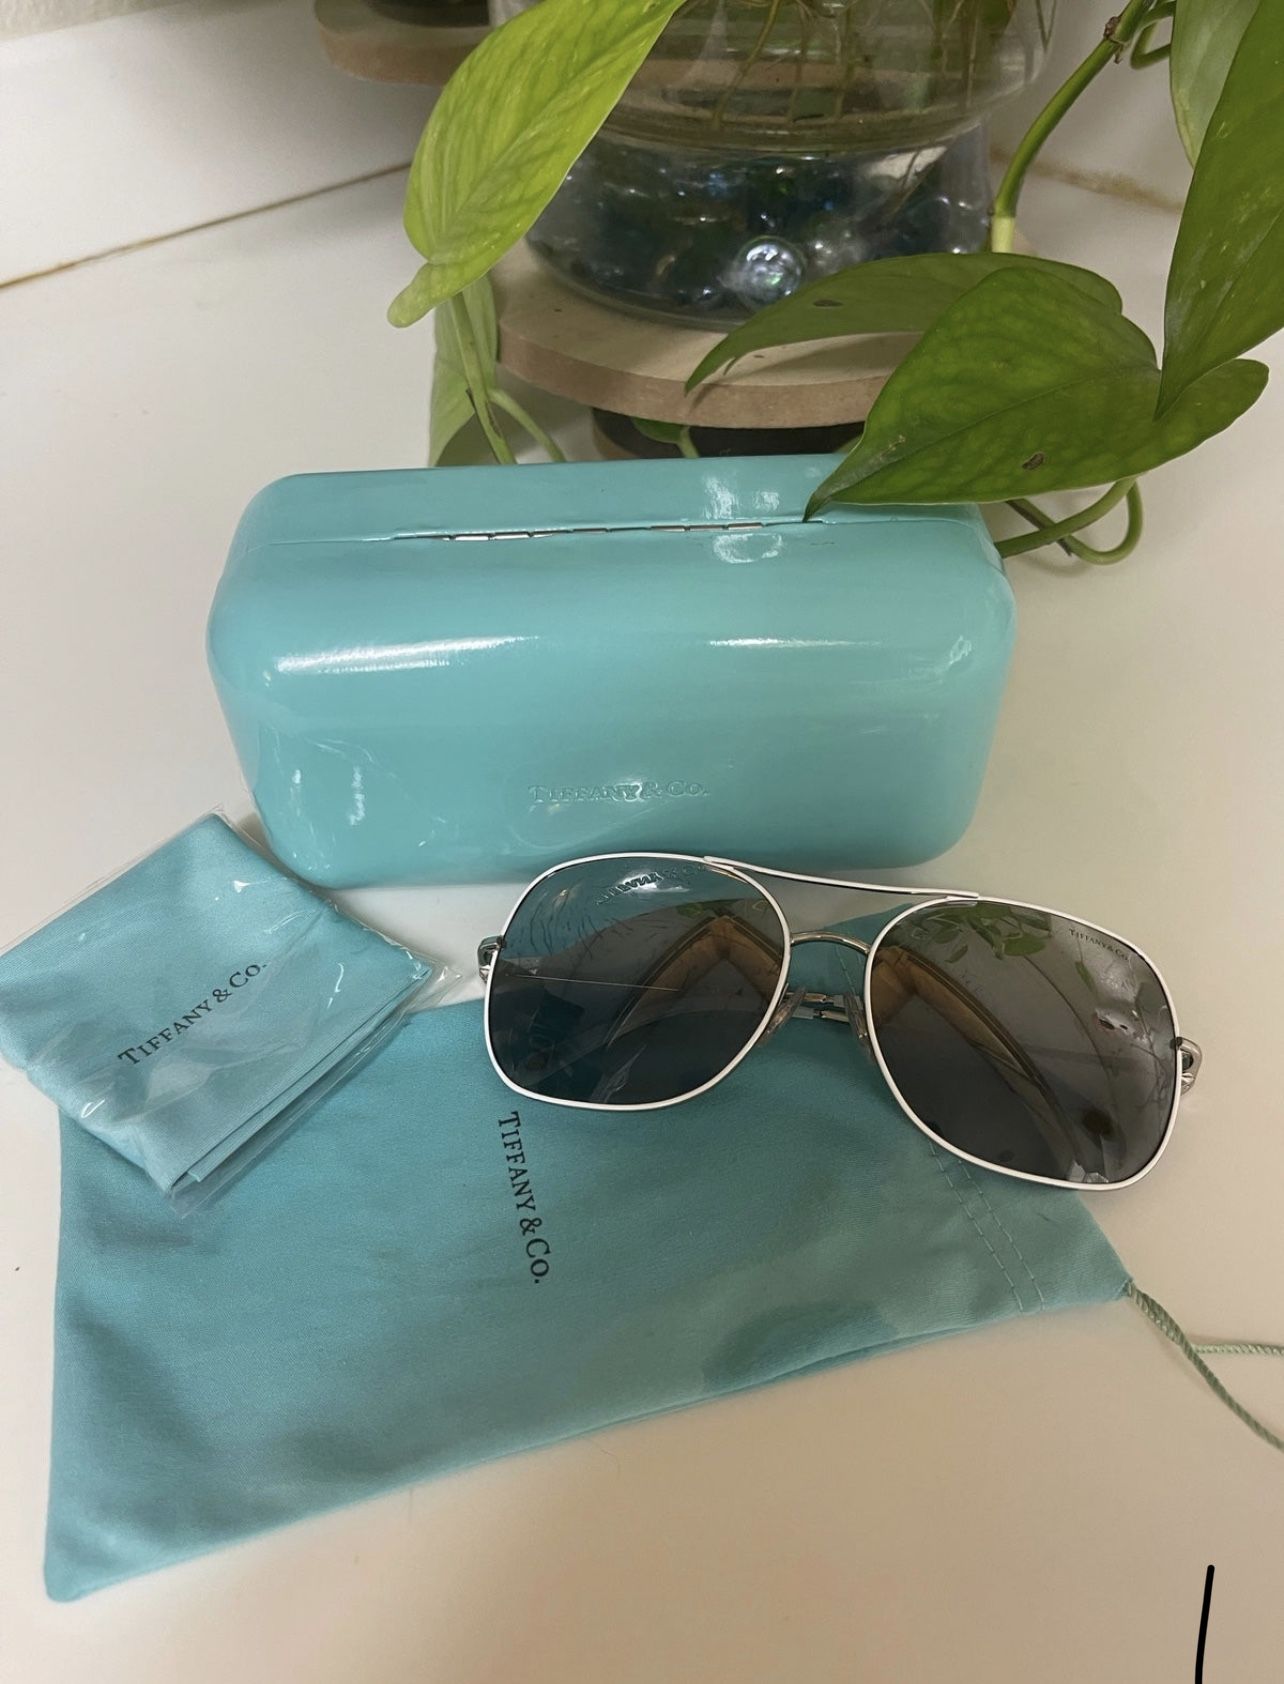 Tiffany & Co. Sunglasses